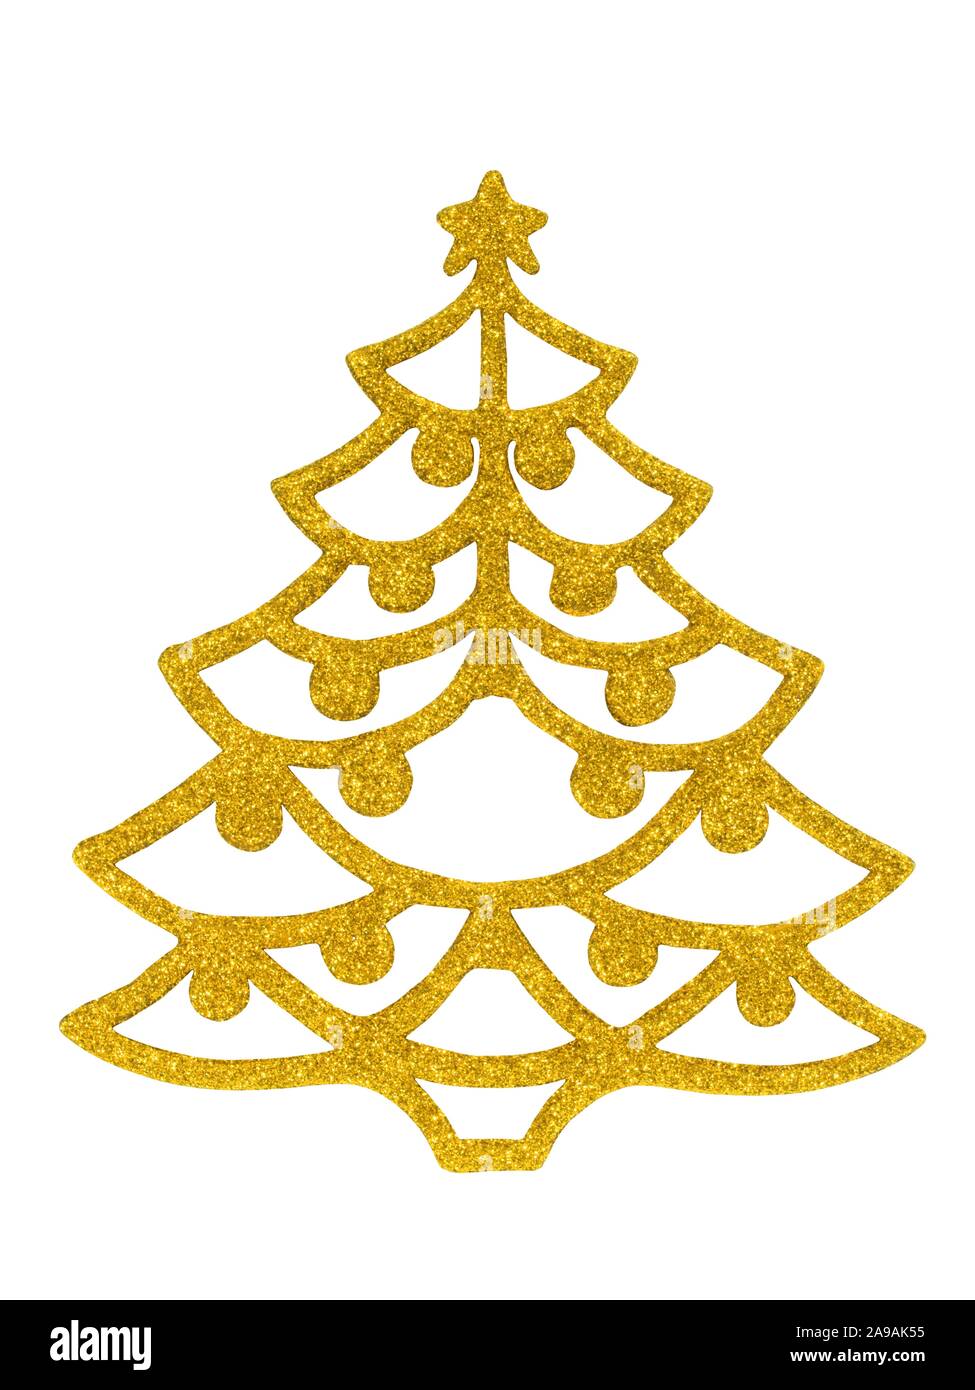 Golden Christmas tree isolated on white background Stock Photo